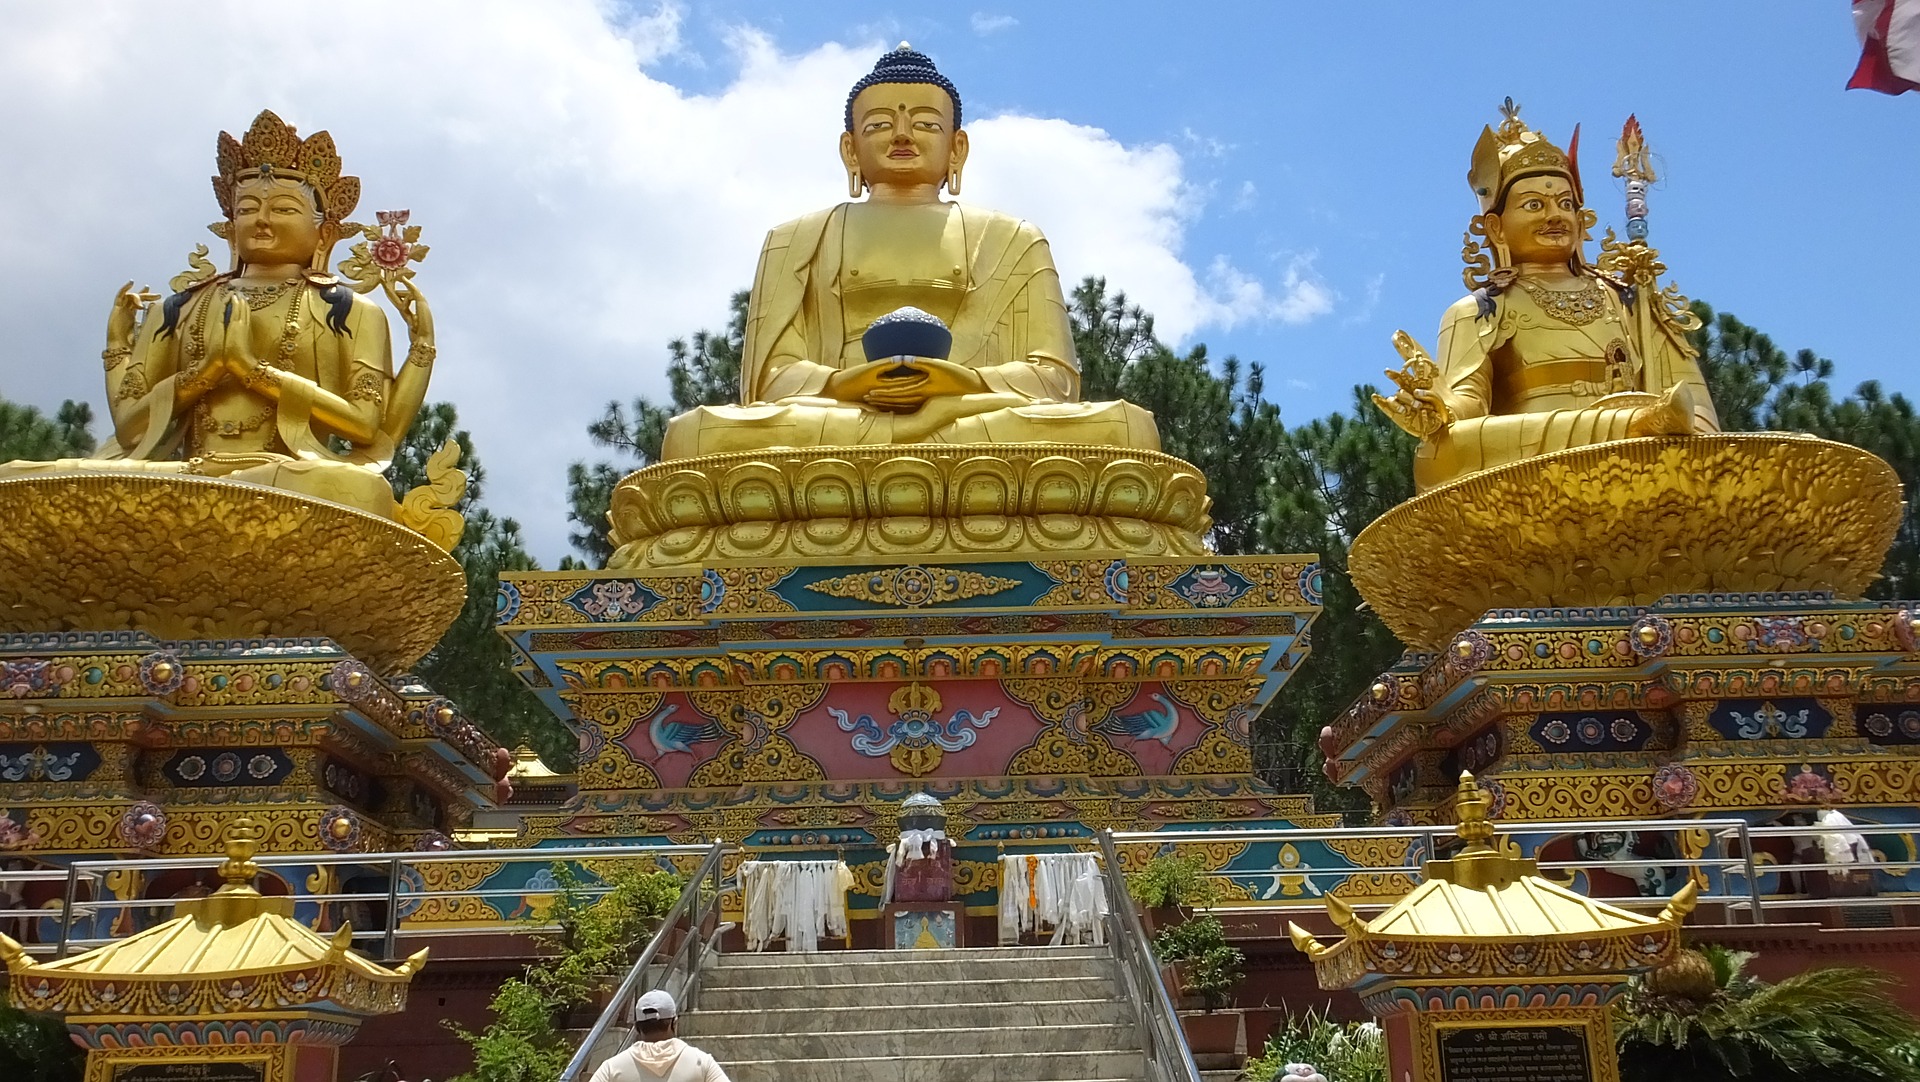 Swayambhu - an ancient religious monument in the Kathmandu Valley.